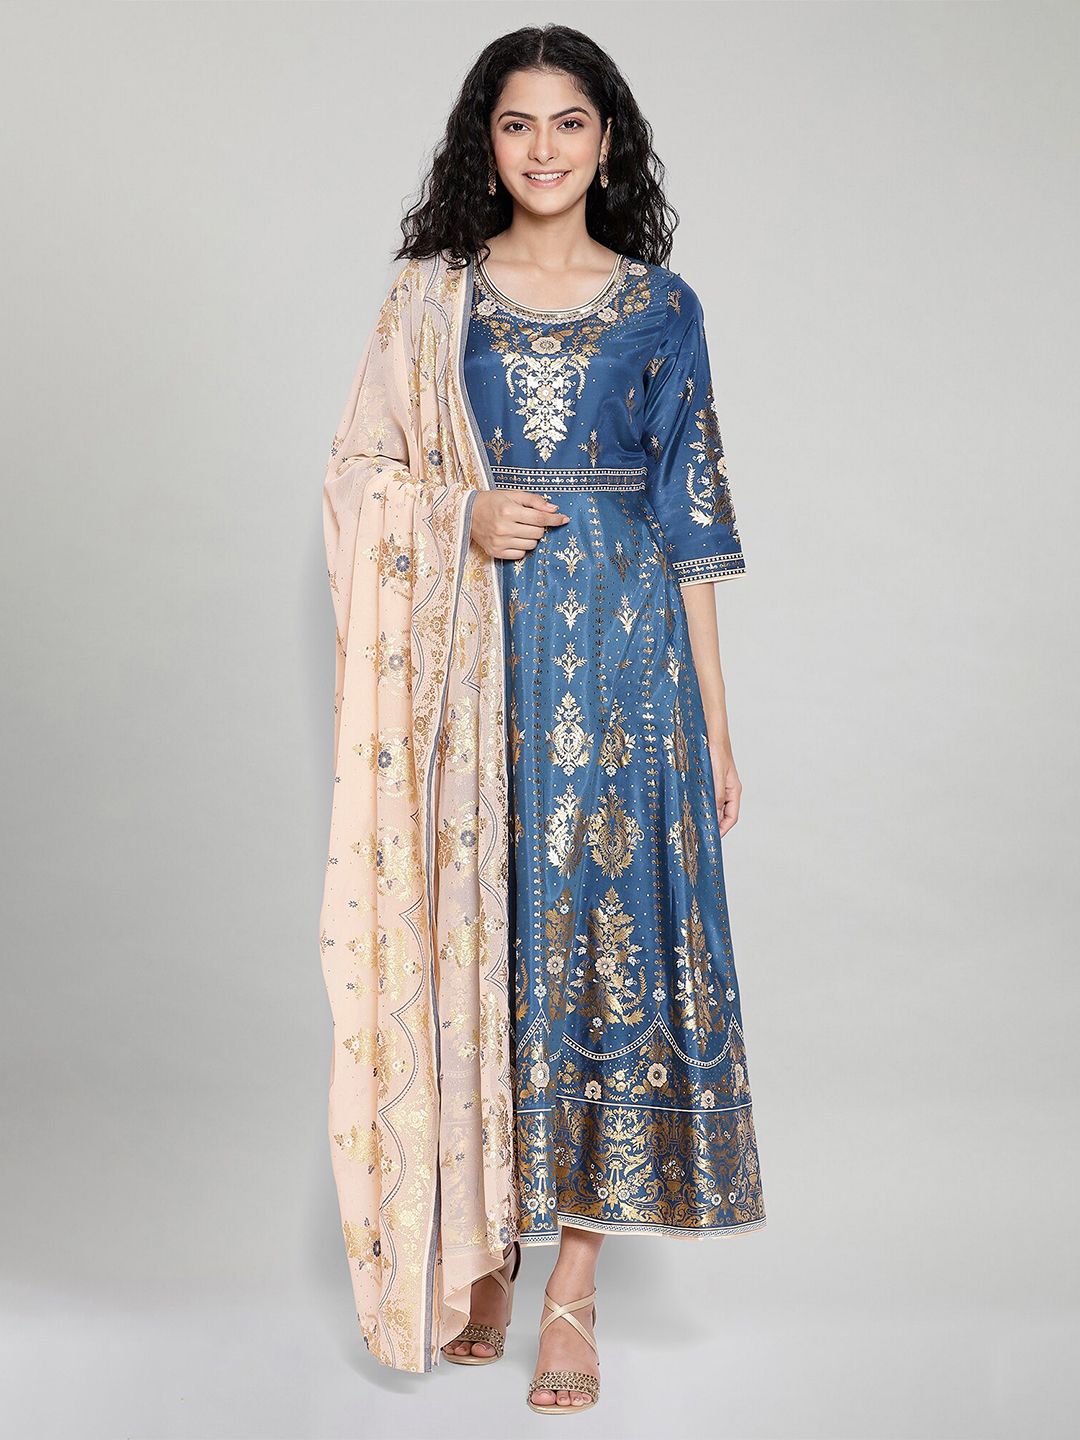 AURELIA Blue & Pink Ethnic Motifs Ethnic Maxi Dress With Dupatta Price in India